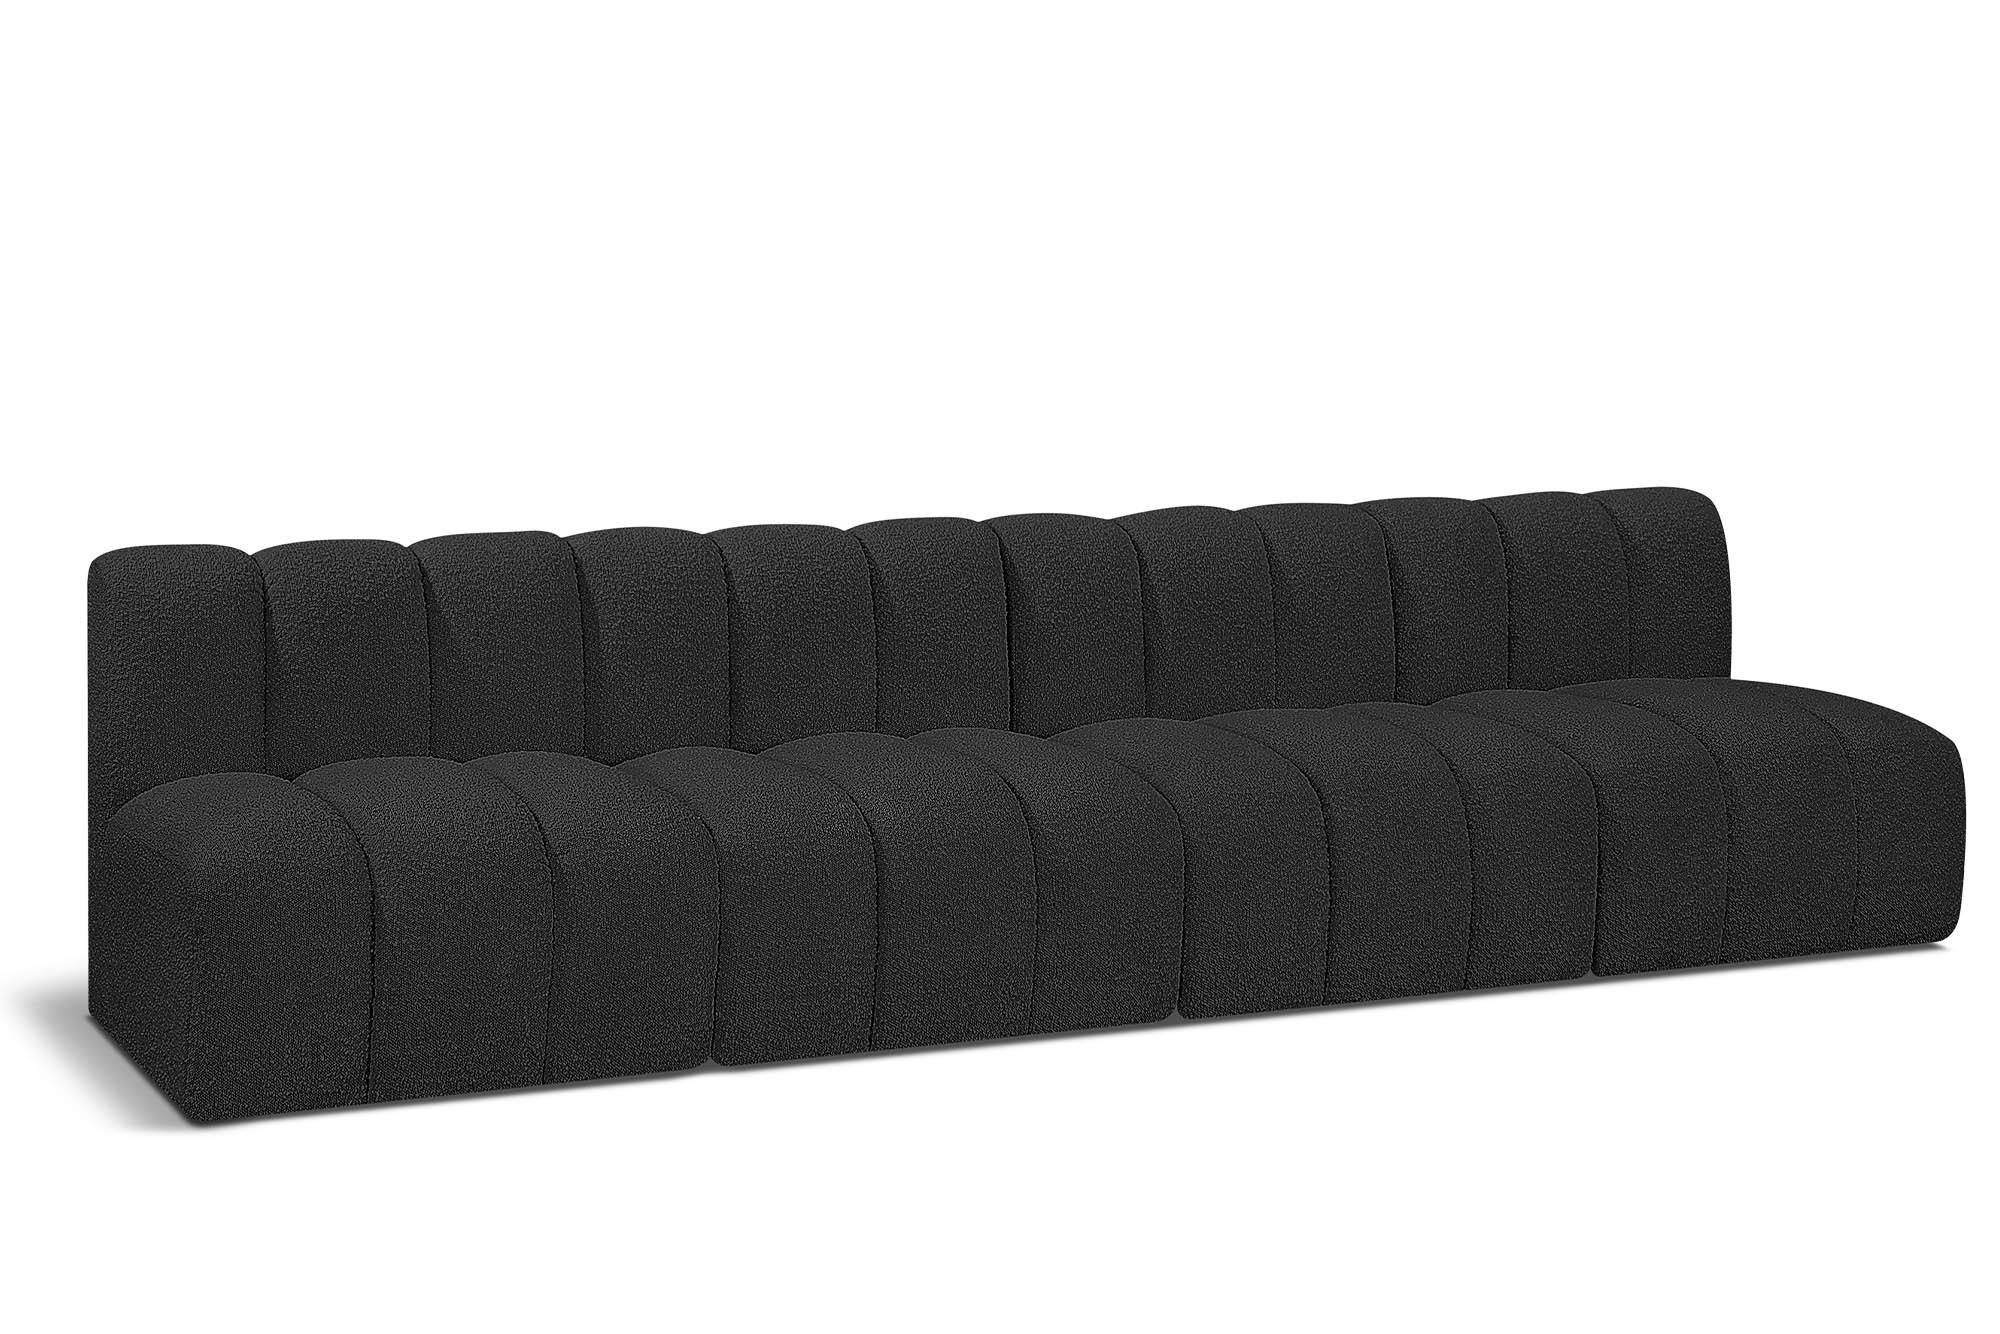 Contemporary, Modern Modular Sectional Sofa ARC 102Black-S4E 102Black-S4E in Black 